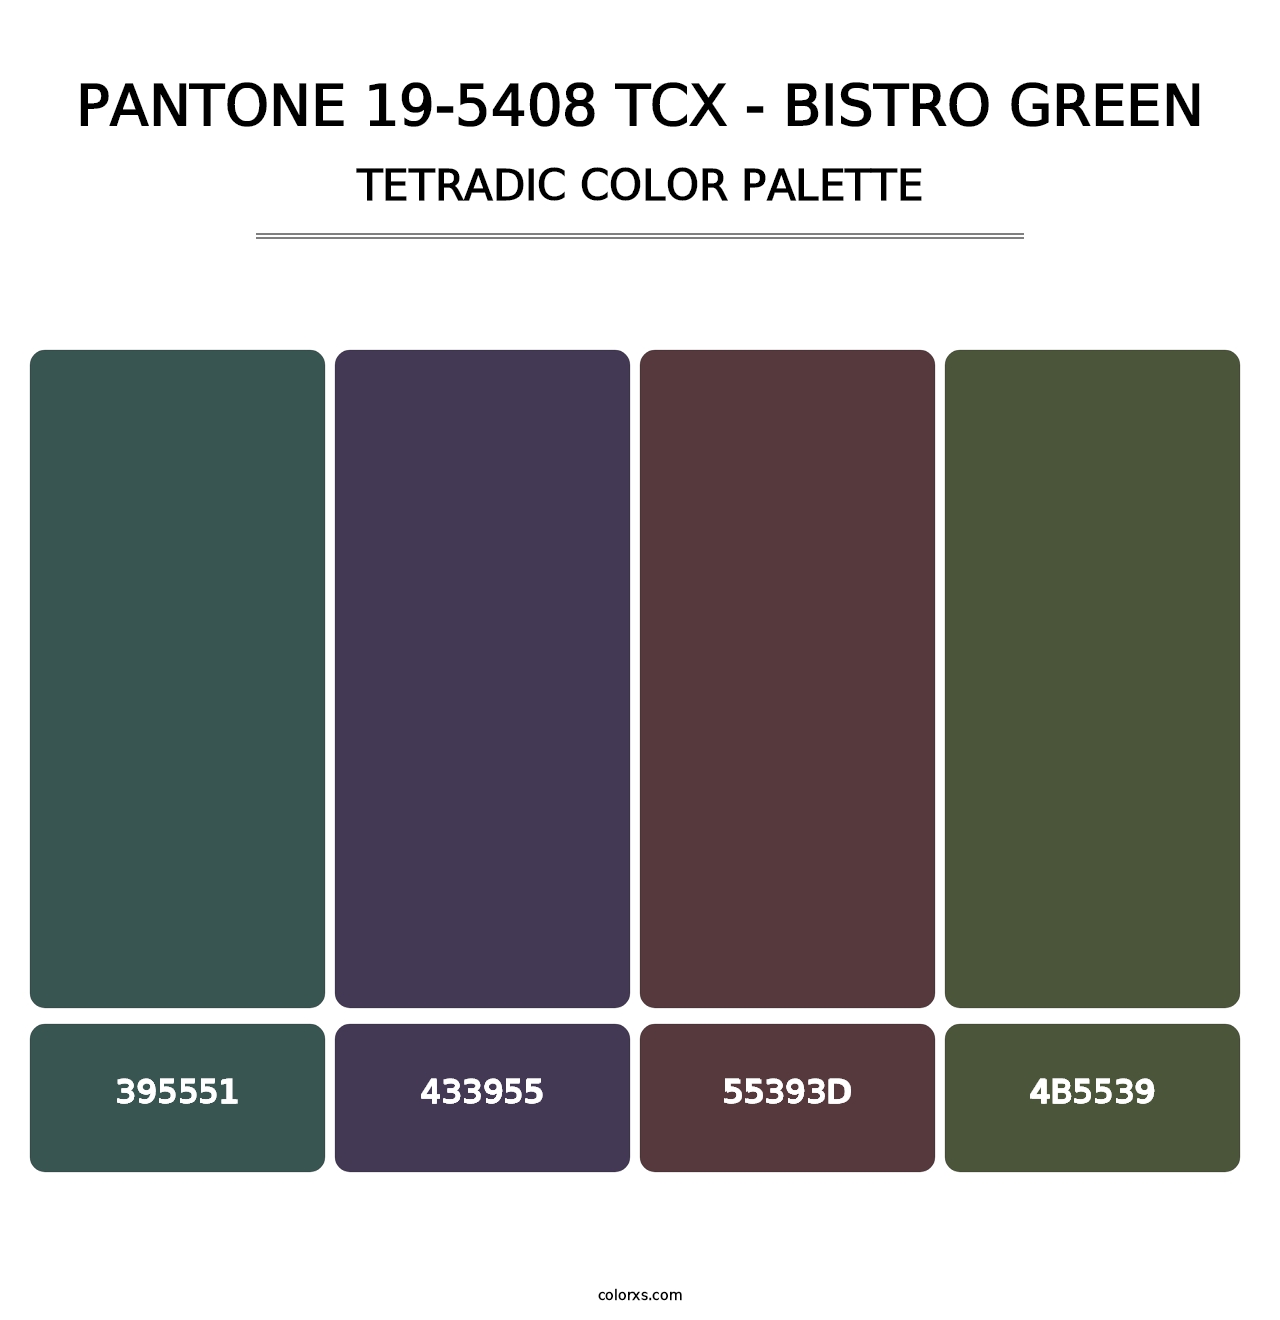 PANTONE 19-5408 TCX - Bistro Green - Tetradic Color Palette